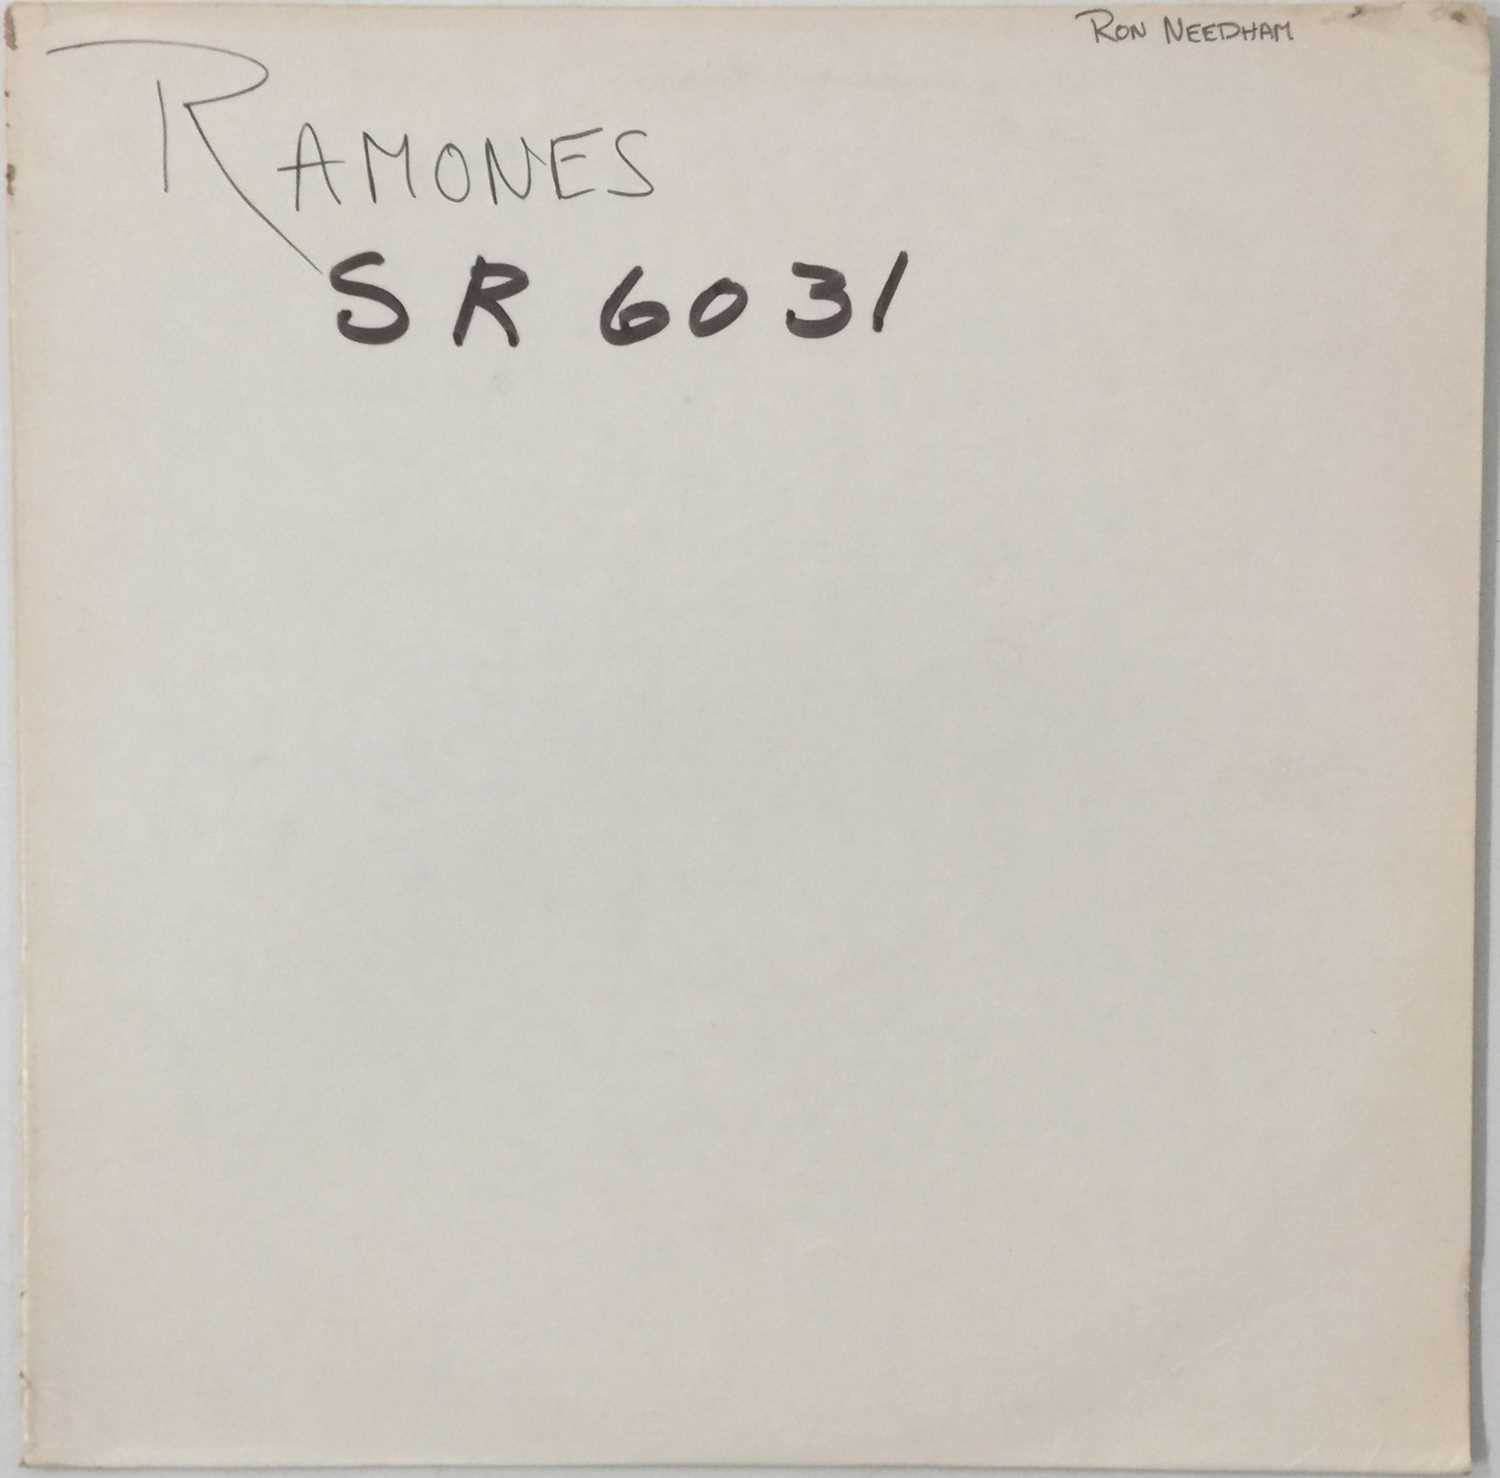 RAMONES - LEAVE HOME LP (PROMOTIONAL COPY - SR 6031) - Image 2 of 6